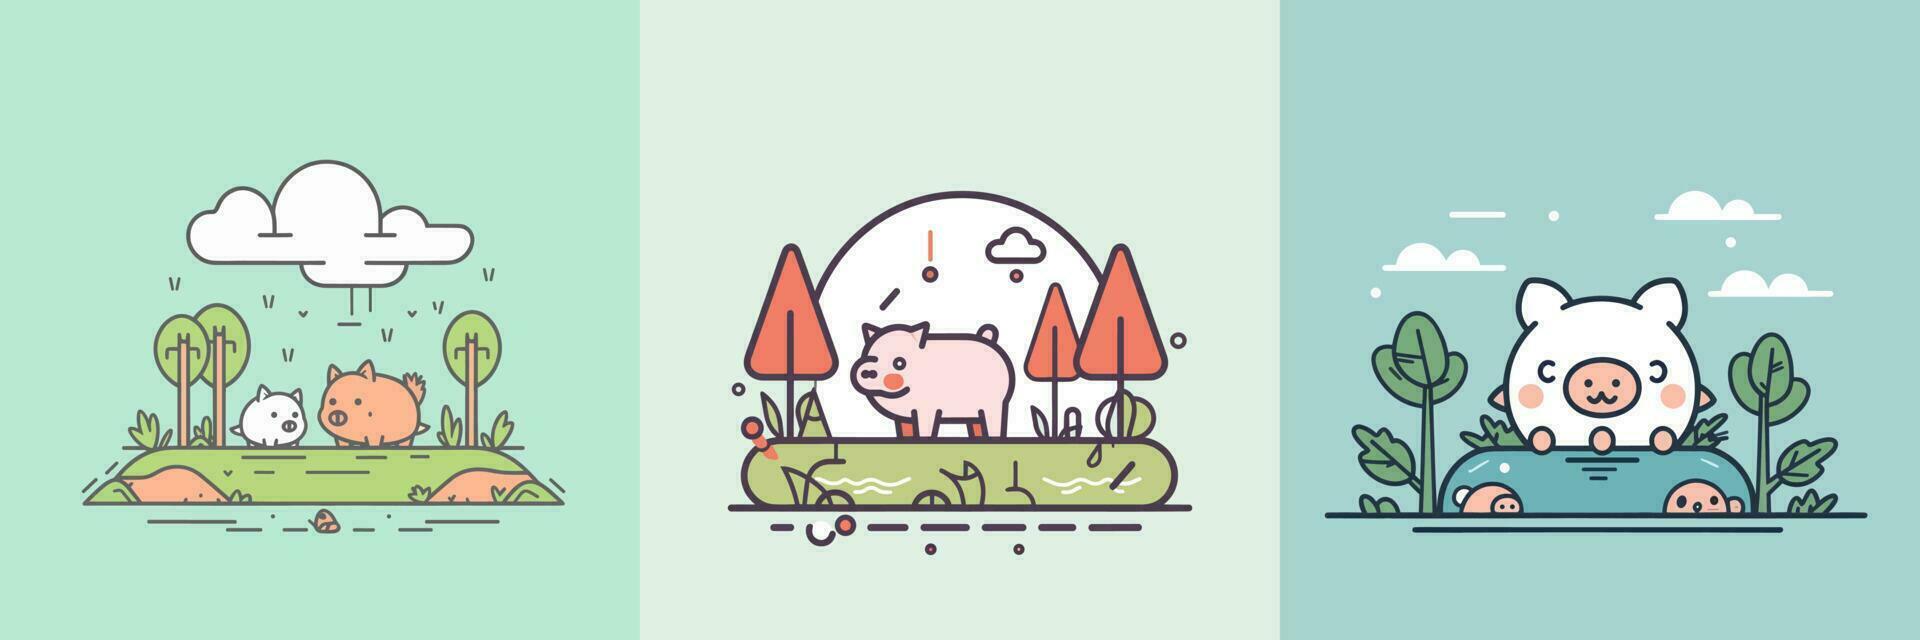 Cute kawaii pig cartoon illustration vector